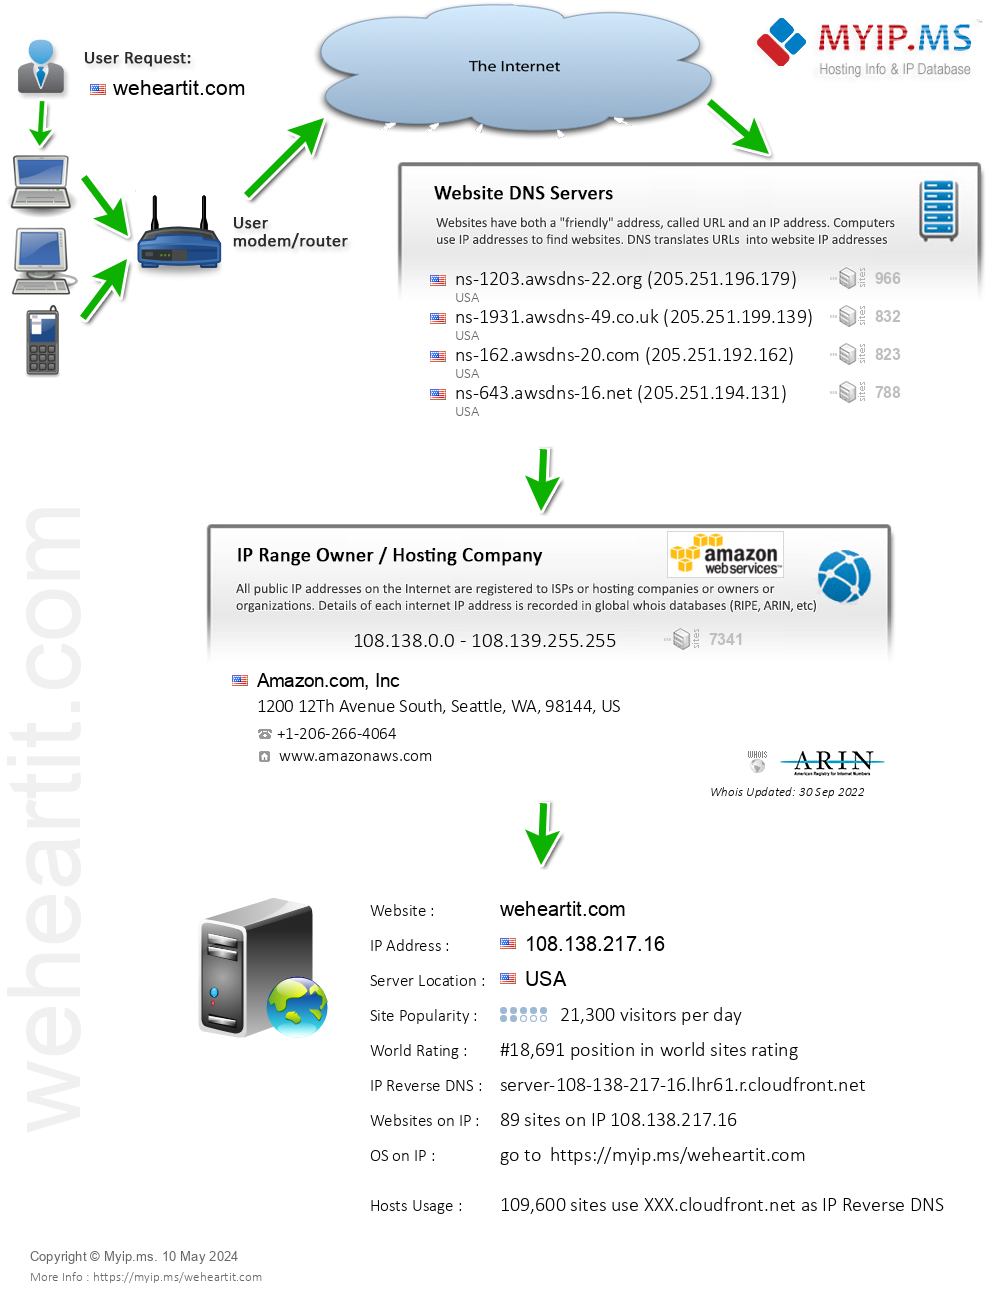 Weheartit.com - Website Hosting Visual IP Diagram